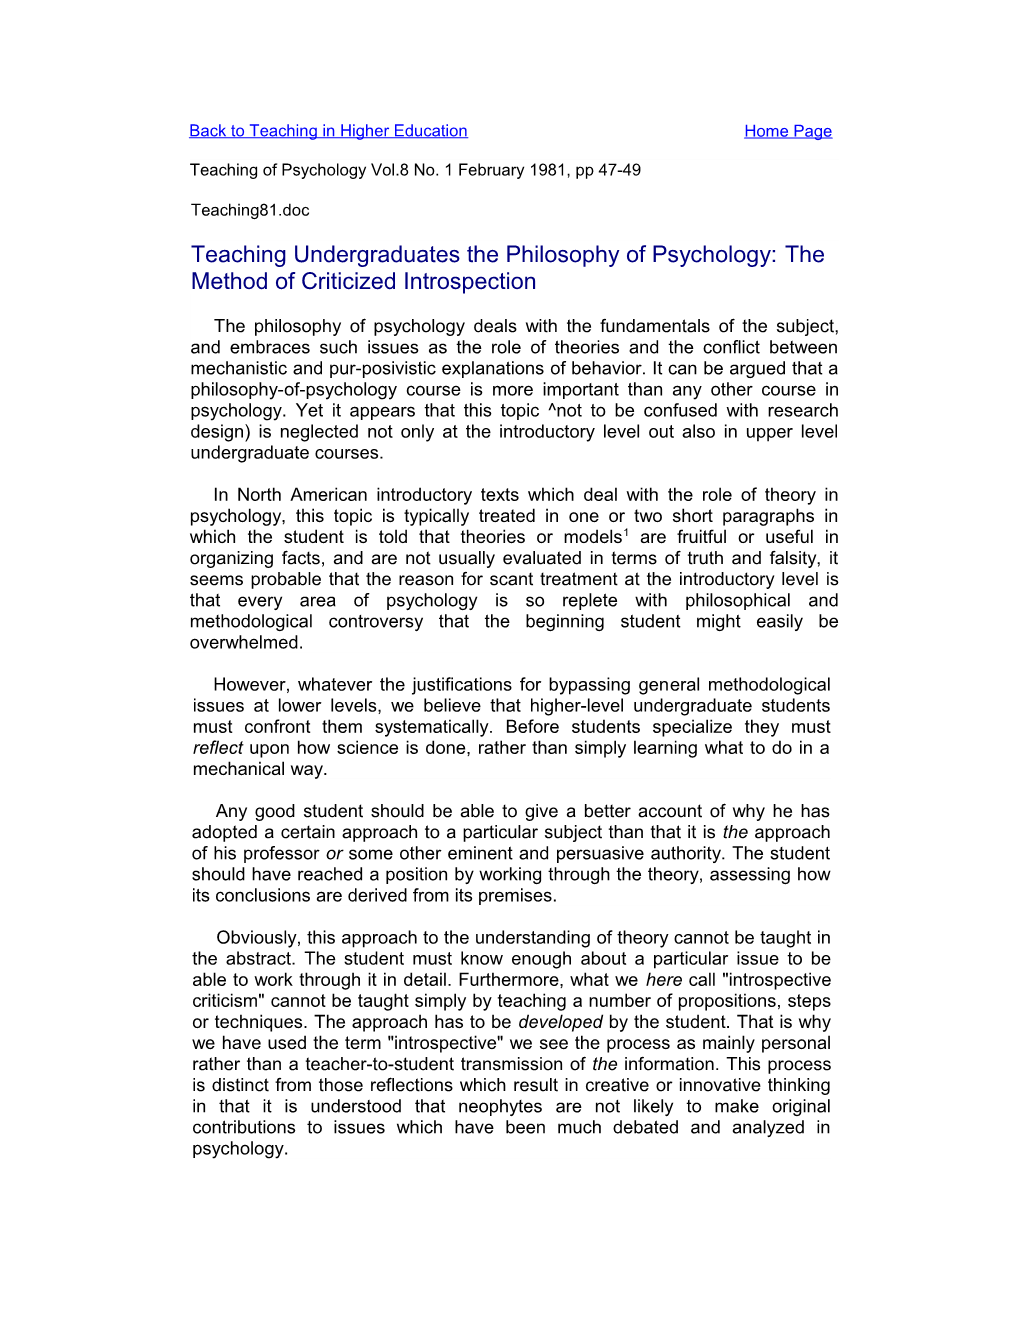 Teaching Undergraduates the Philosophy of Psychology: the Method of Criticized Introspection